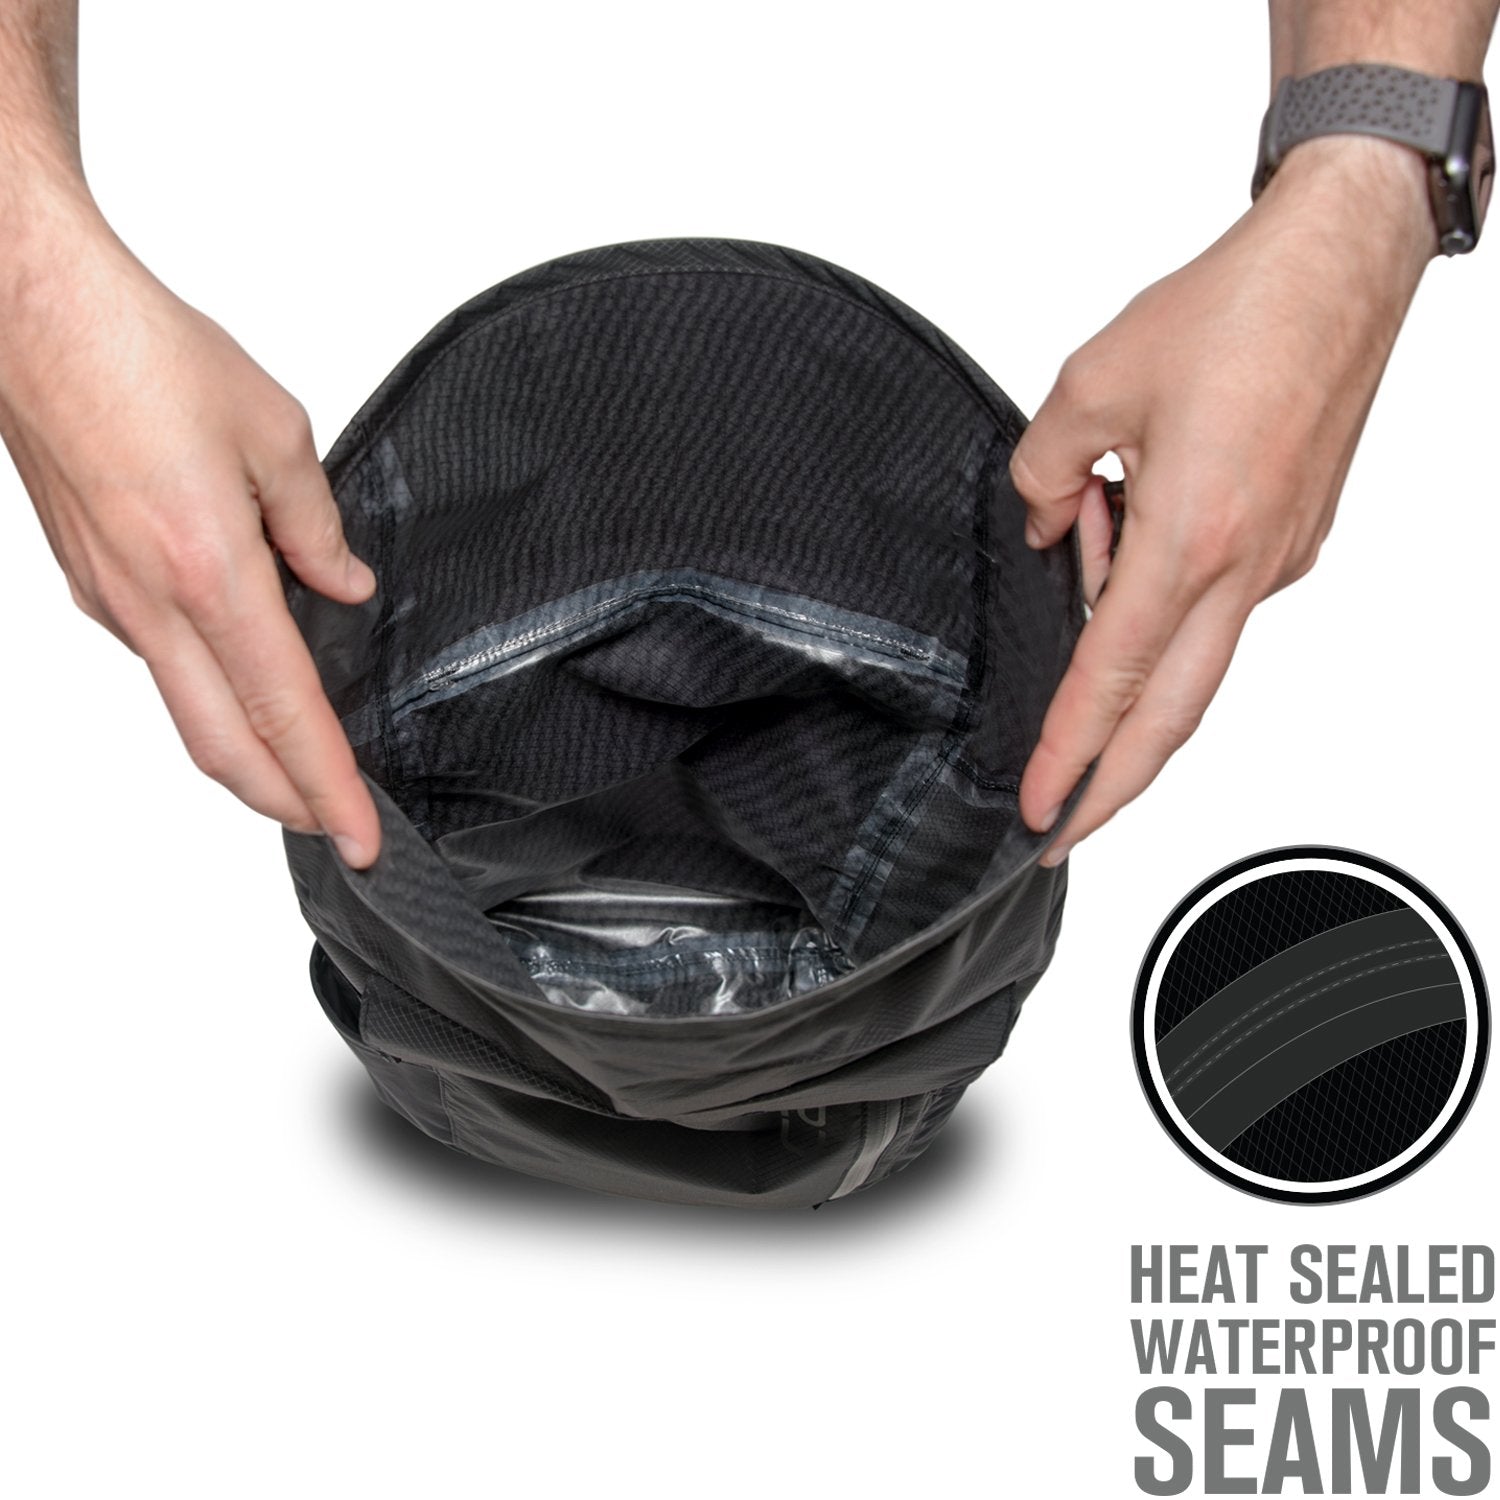 catalyst waterproof 20l backpack top view showing sealed seams text reads heat sealed waterproof seams